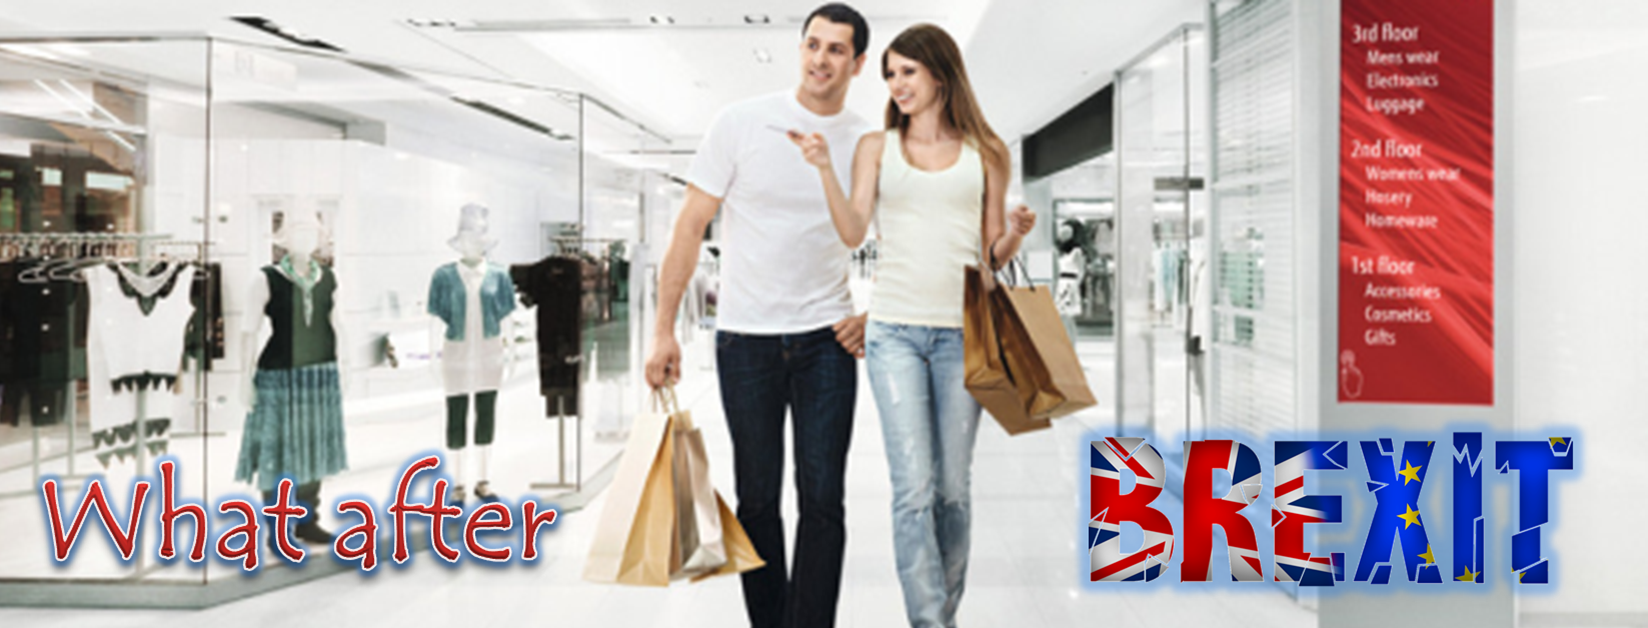 Retail after Brexit (Credits: http://www.fujitsu.com/)